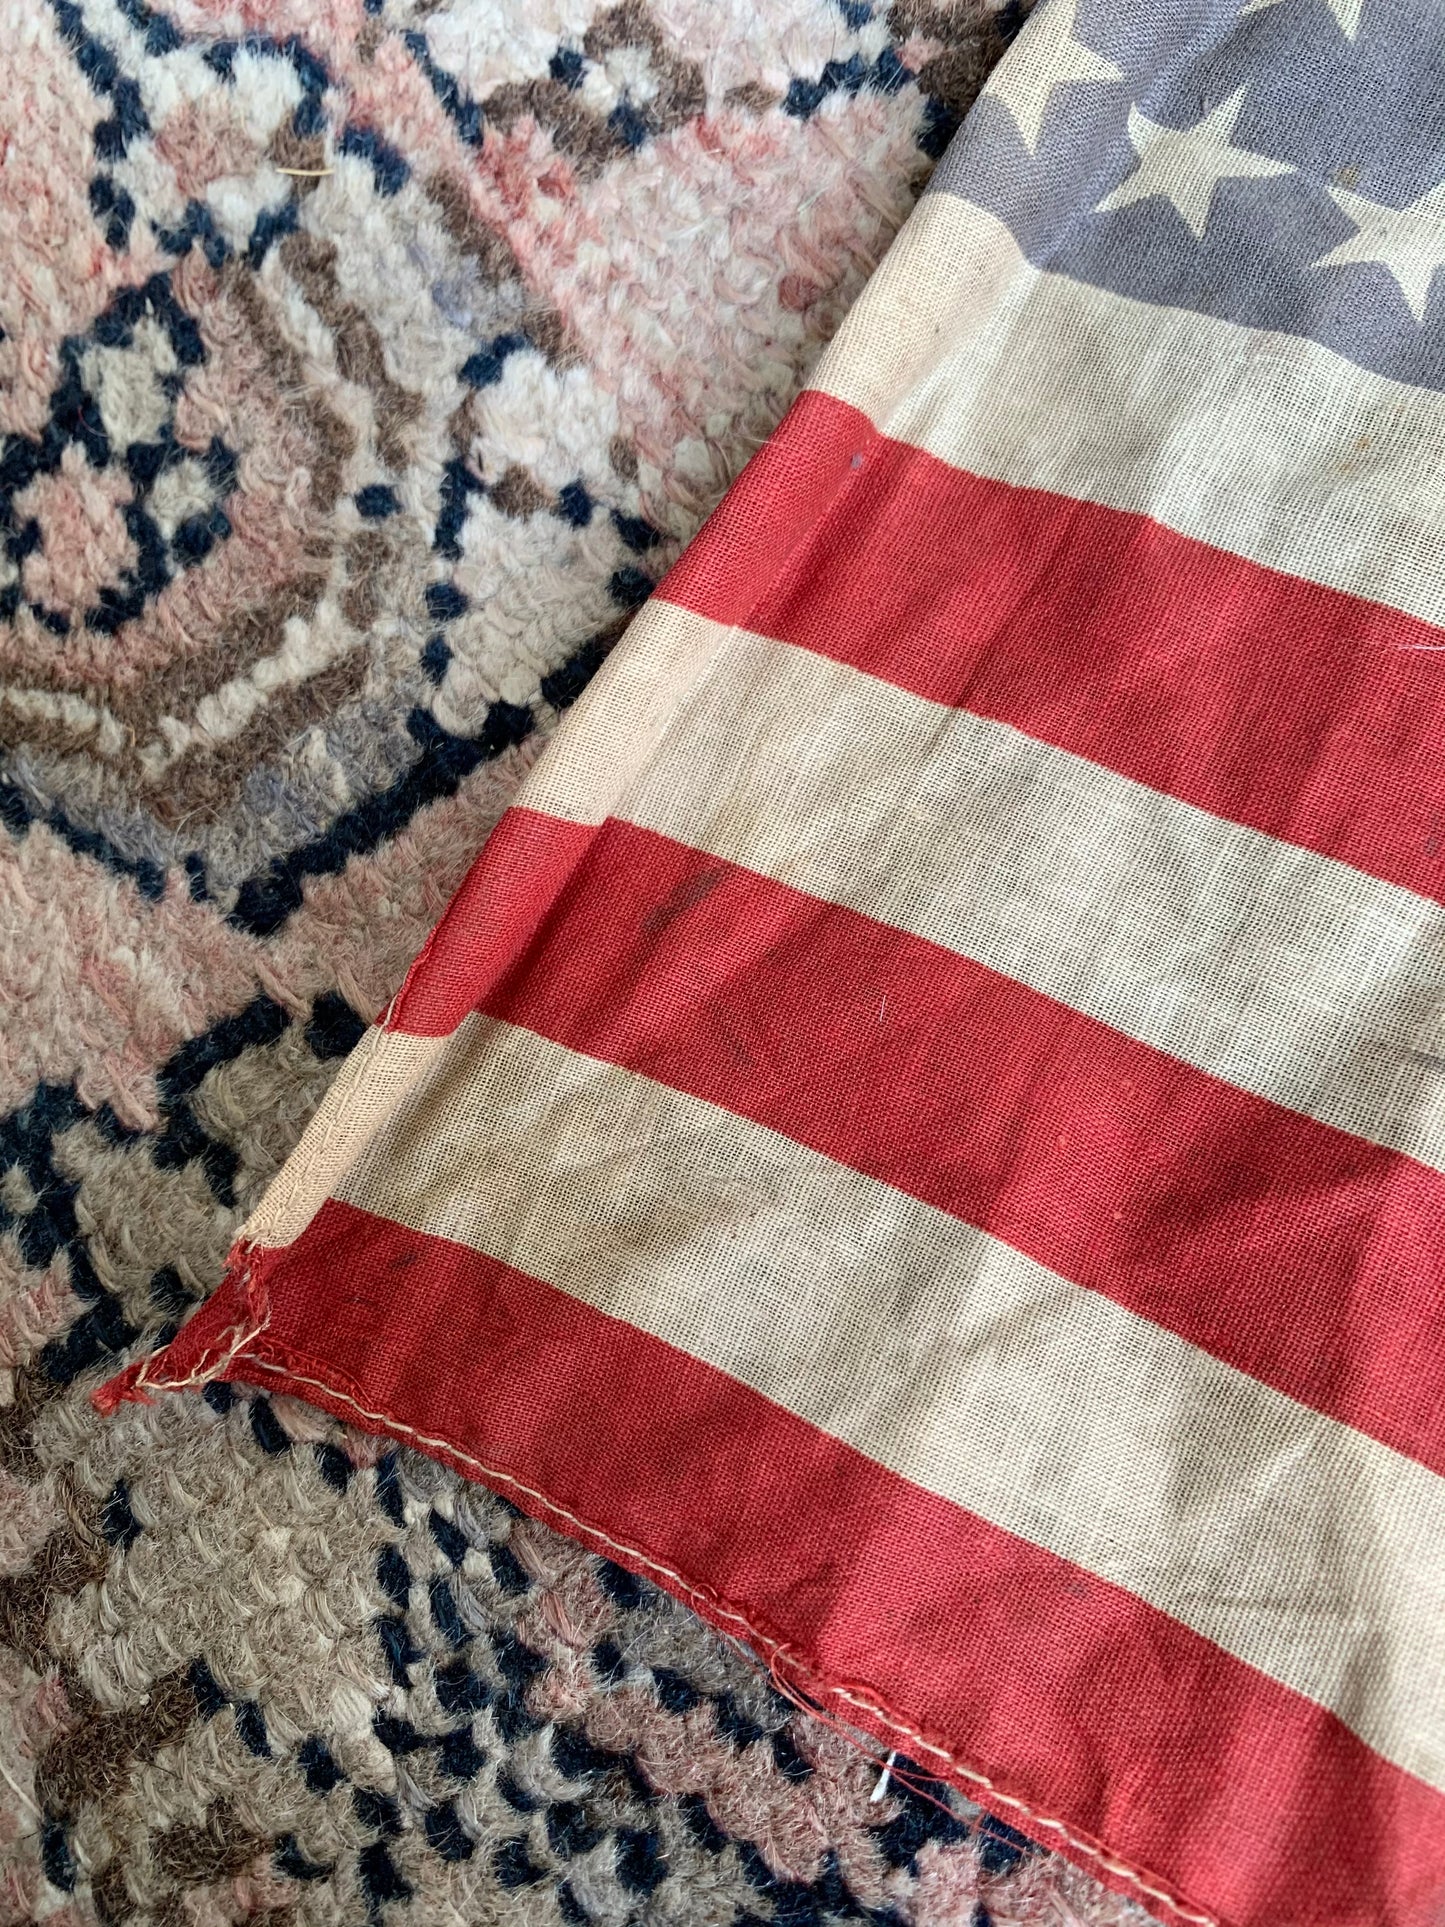 Vintage tattered 48 star mini flag